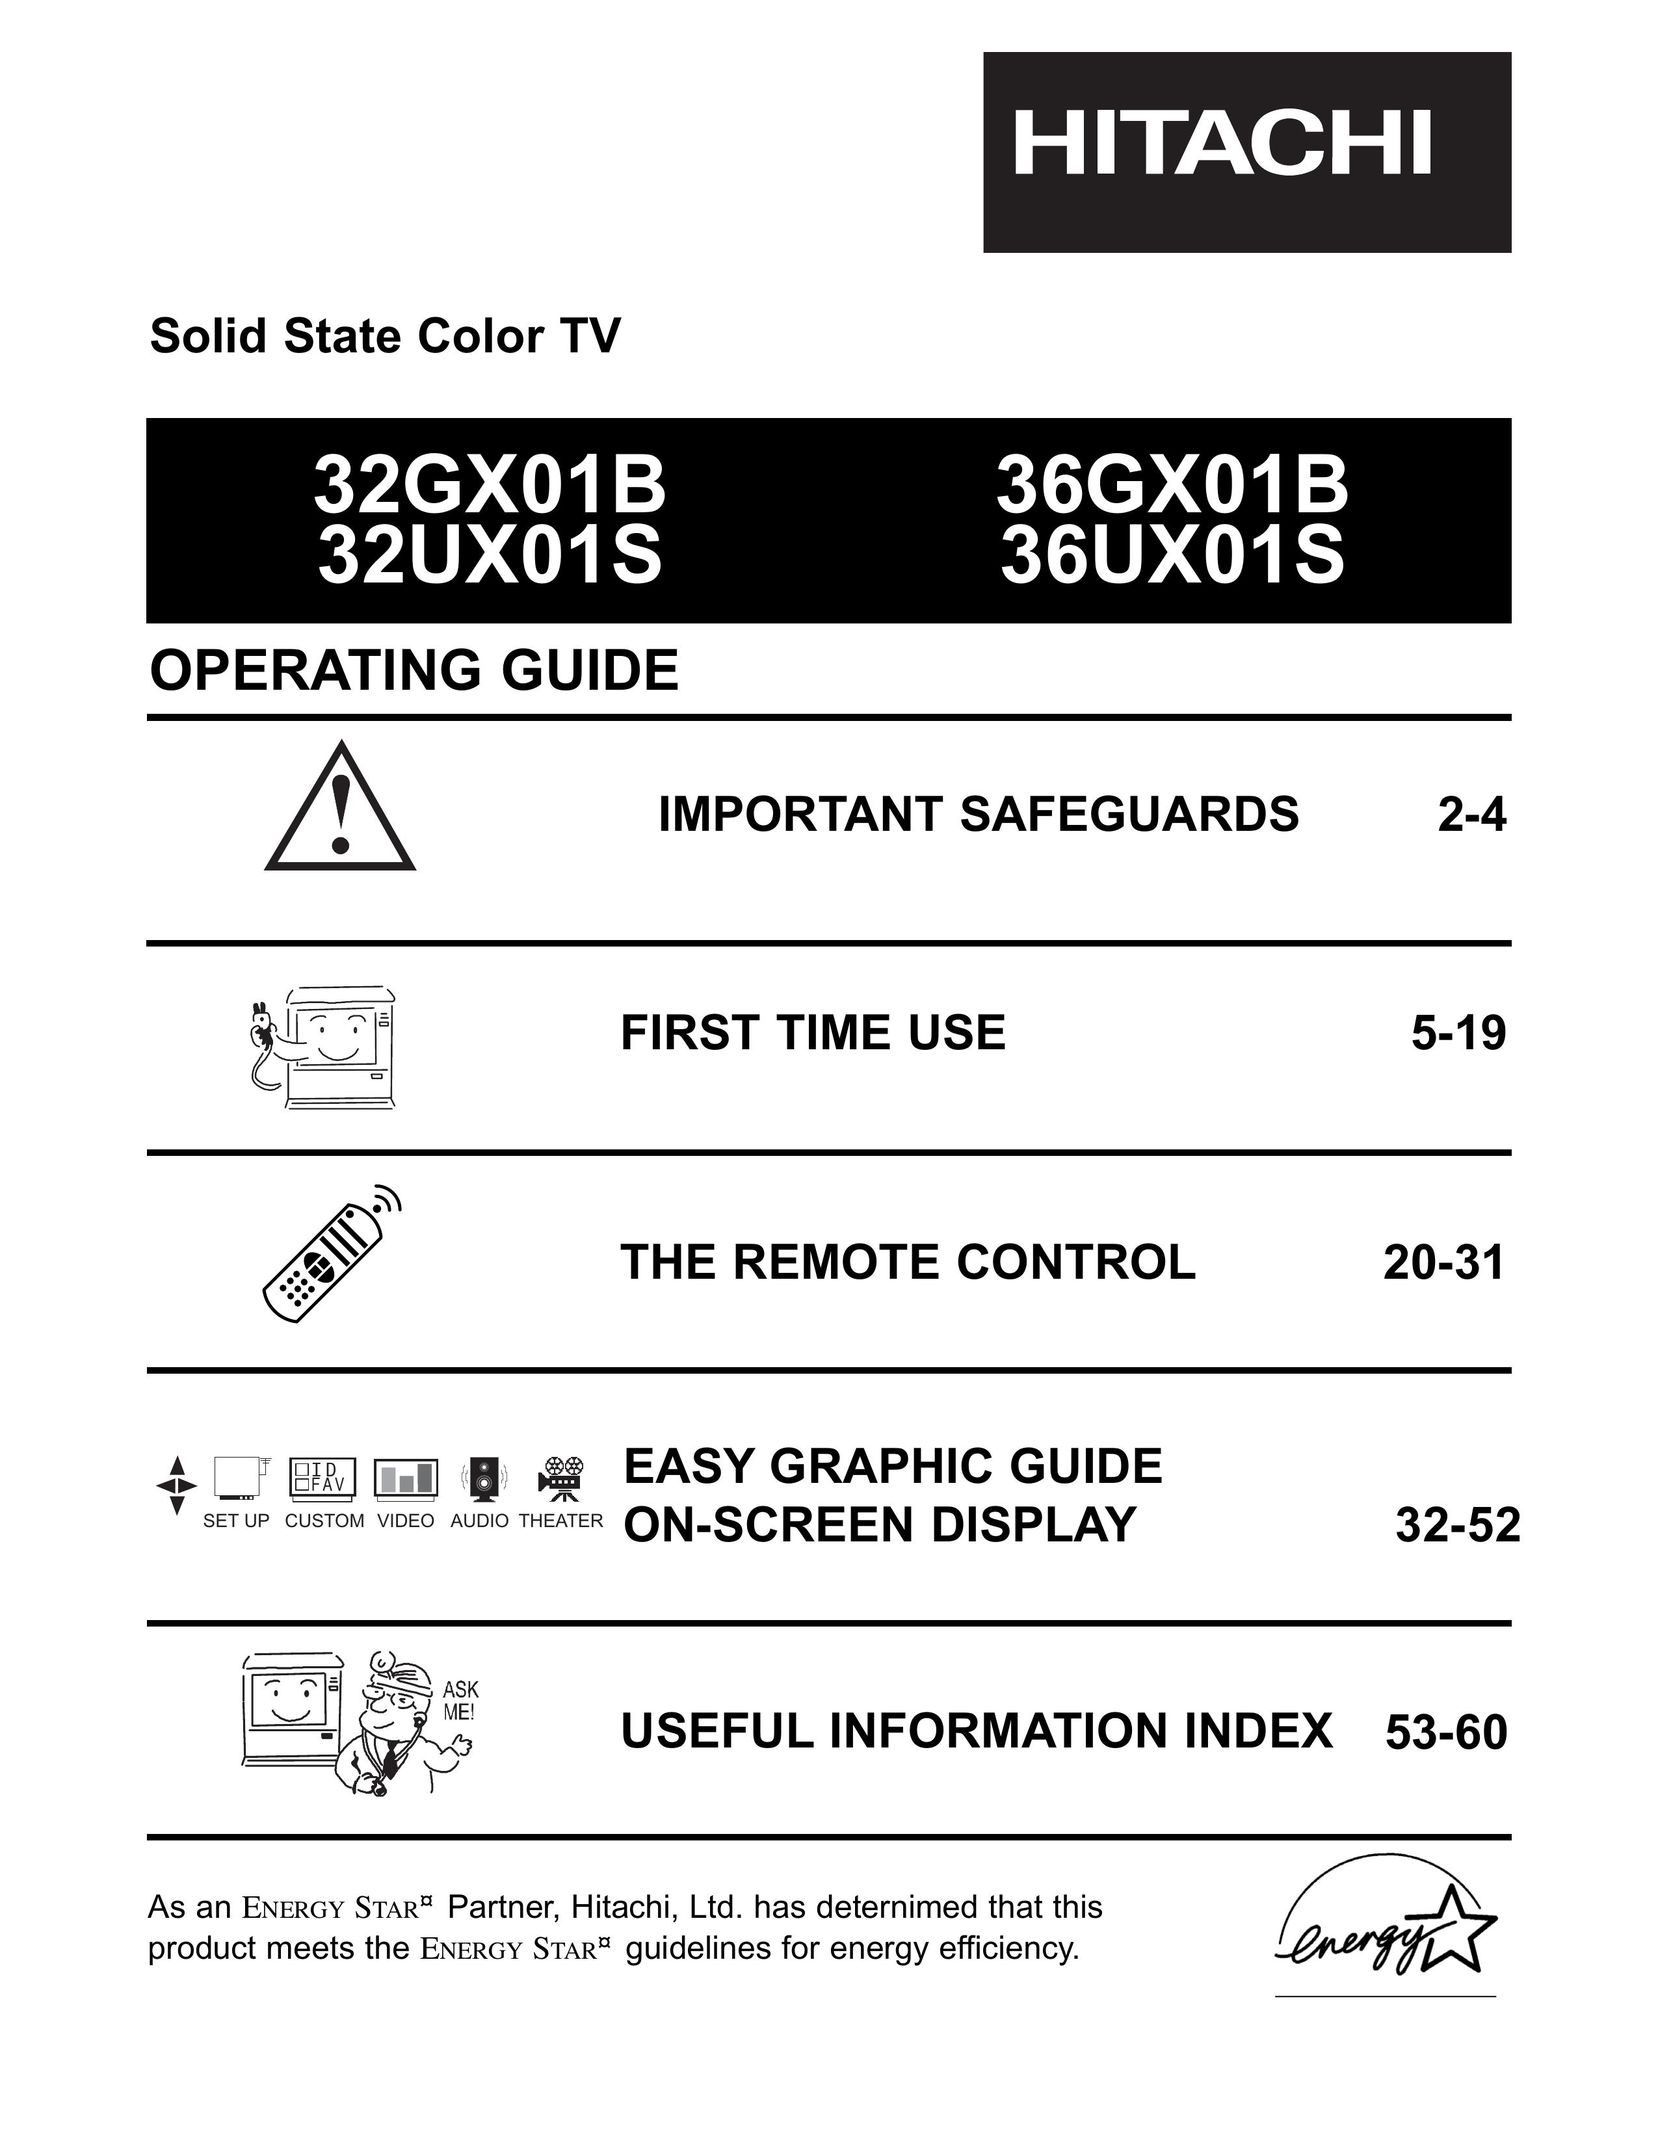 Hitachi 36GX01B, 36UX01S, 32GX01B, 32UX01S CRT Television User Manual